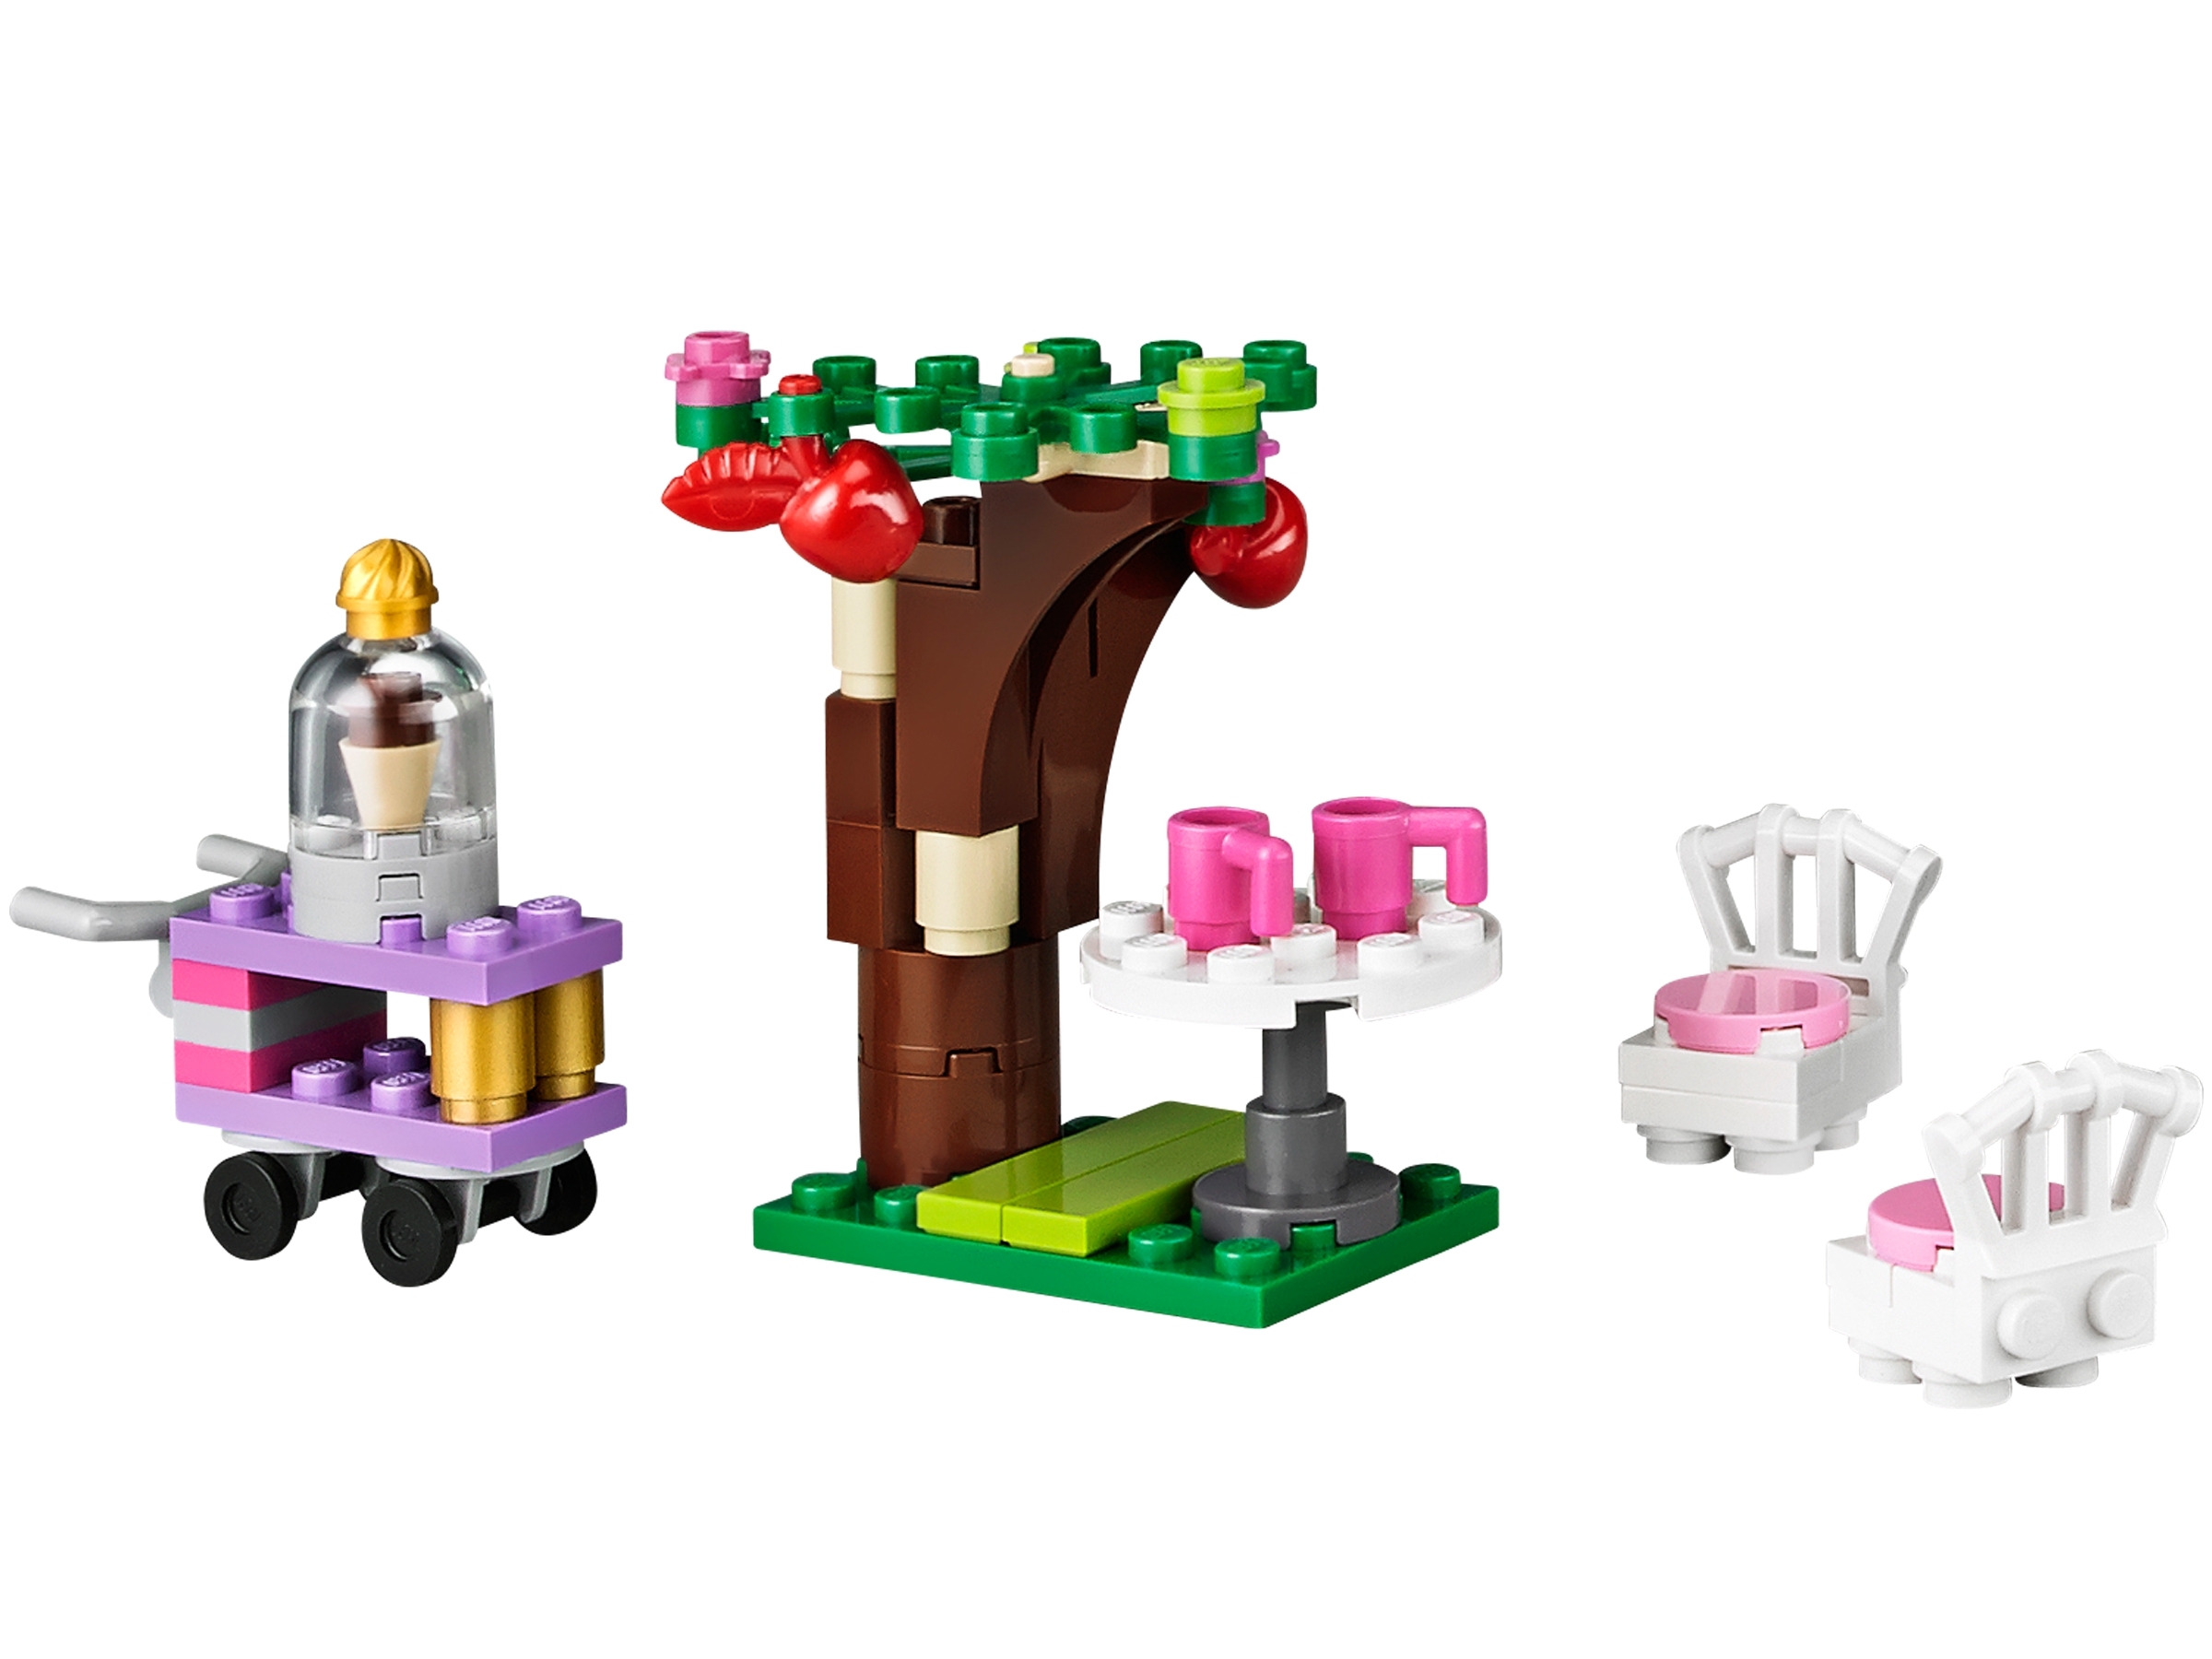 New Lego Disney Princess MiniFigure CINDERELLA from set 41055 